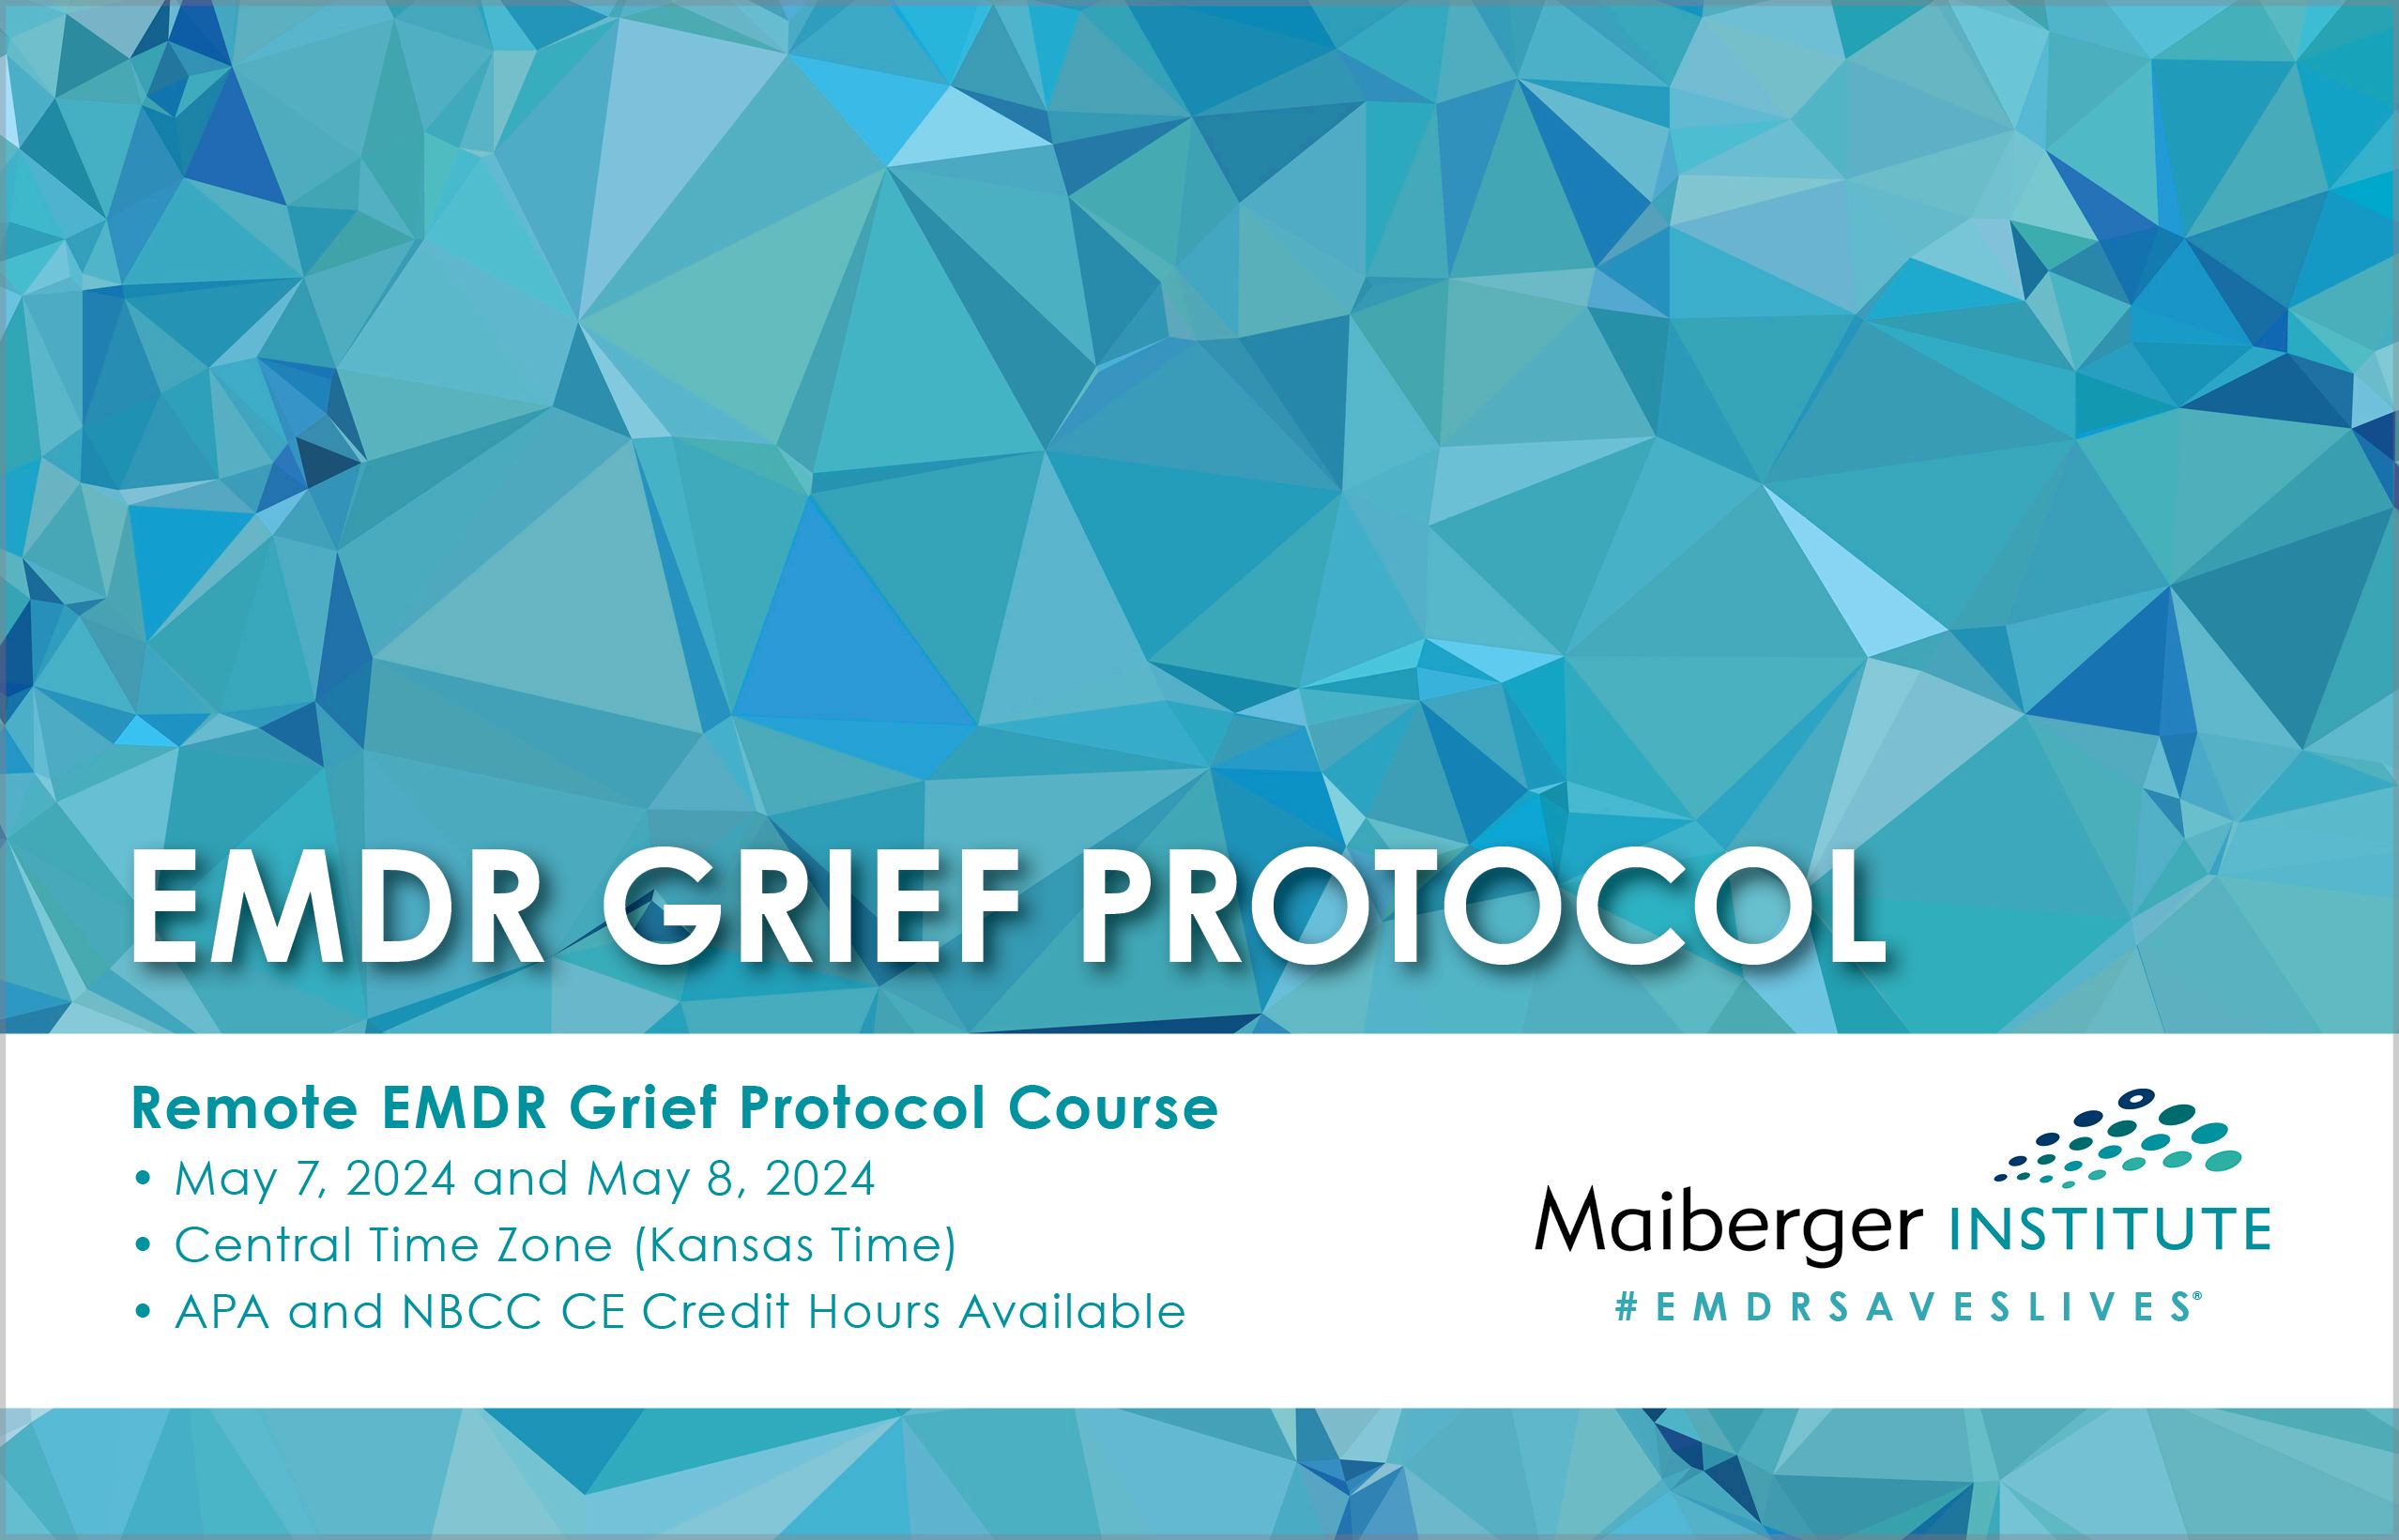 Remote EMDR Grief Protocol Course - May 2024 - Maiberger Institute - EMDR Events Calendar